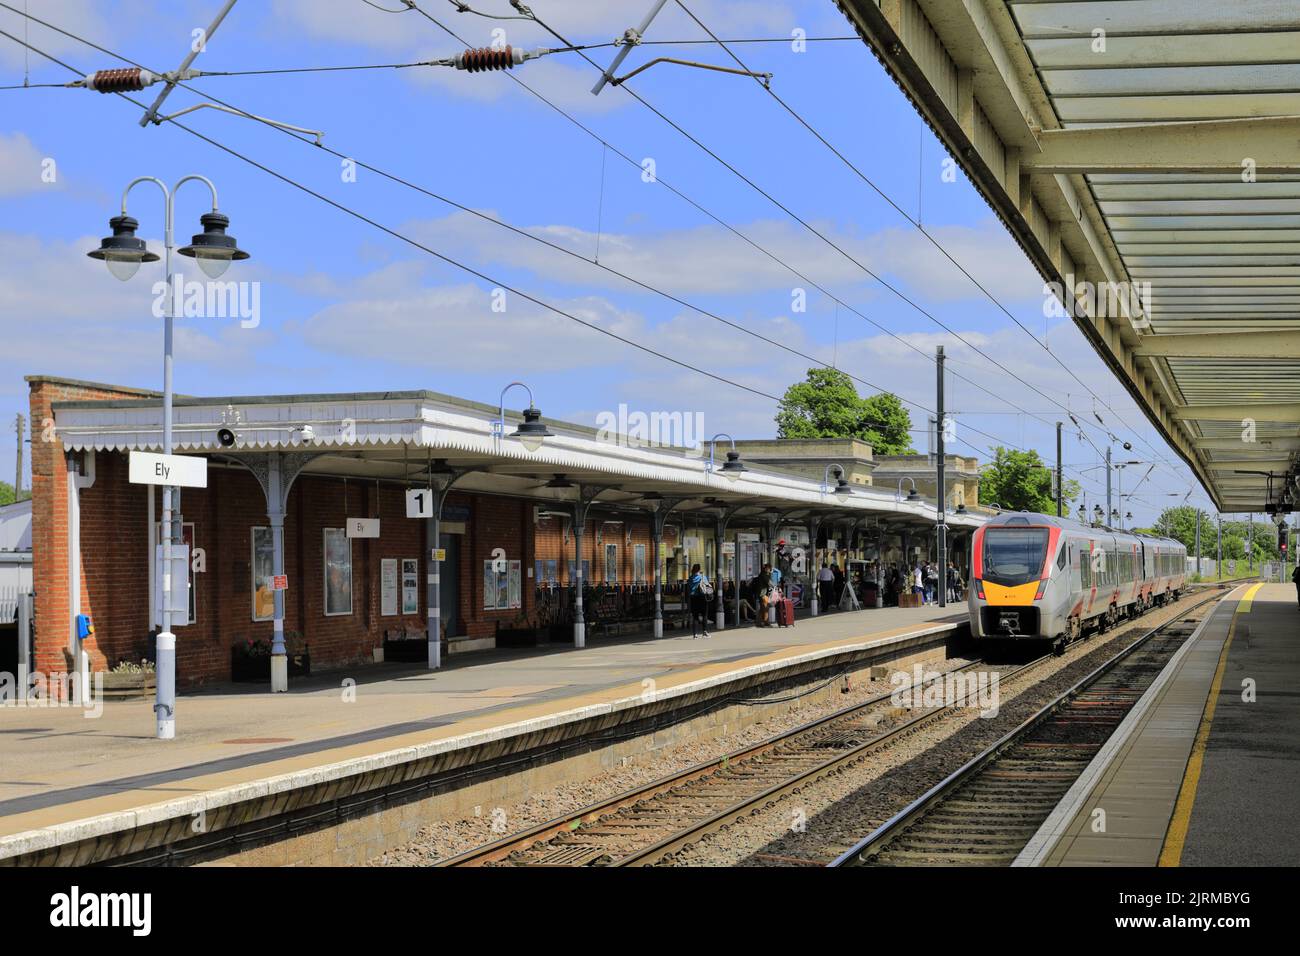 Greateranglia trains, Class 755 train at Ely station, Ely city, Cambridgeshire, England Stock Photo